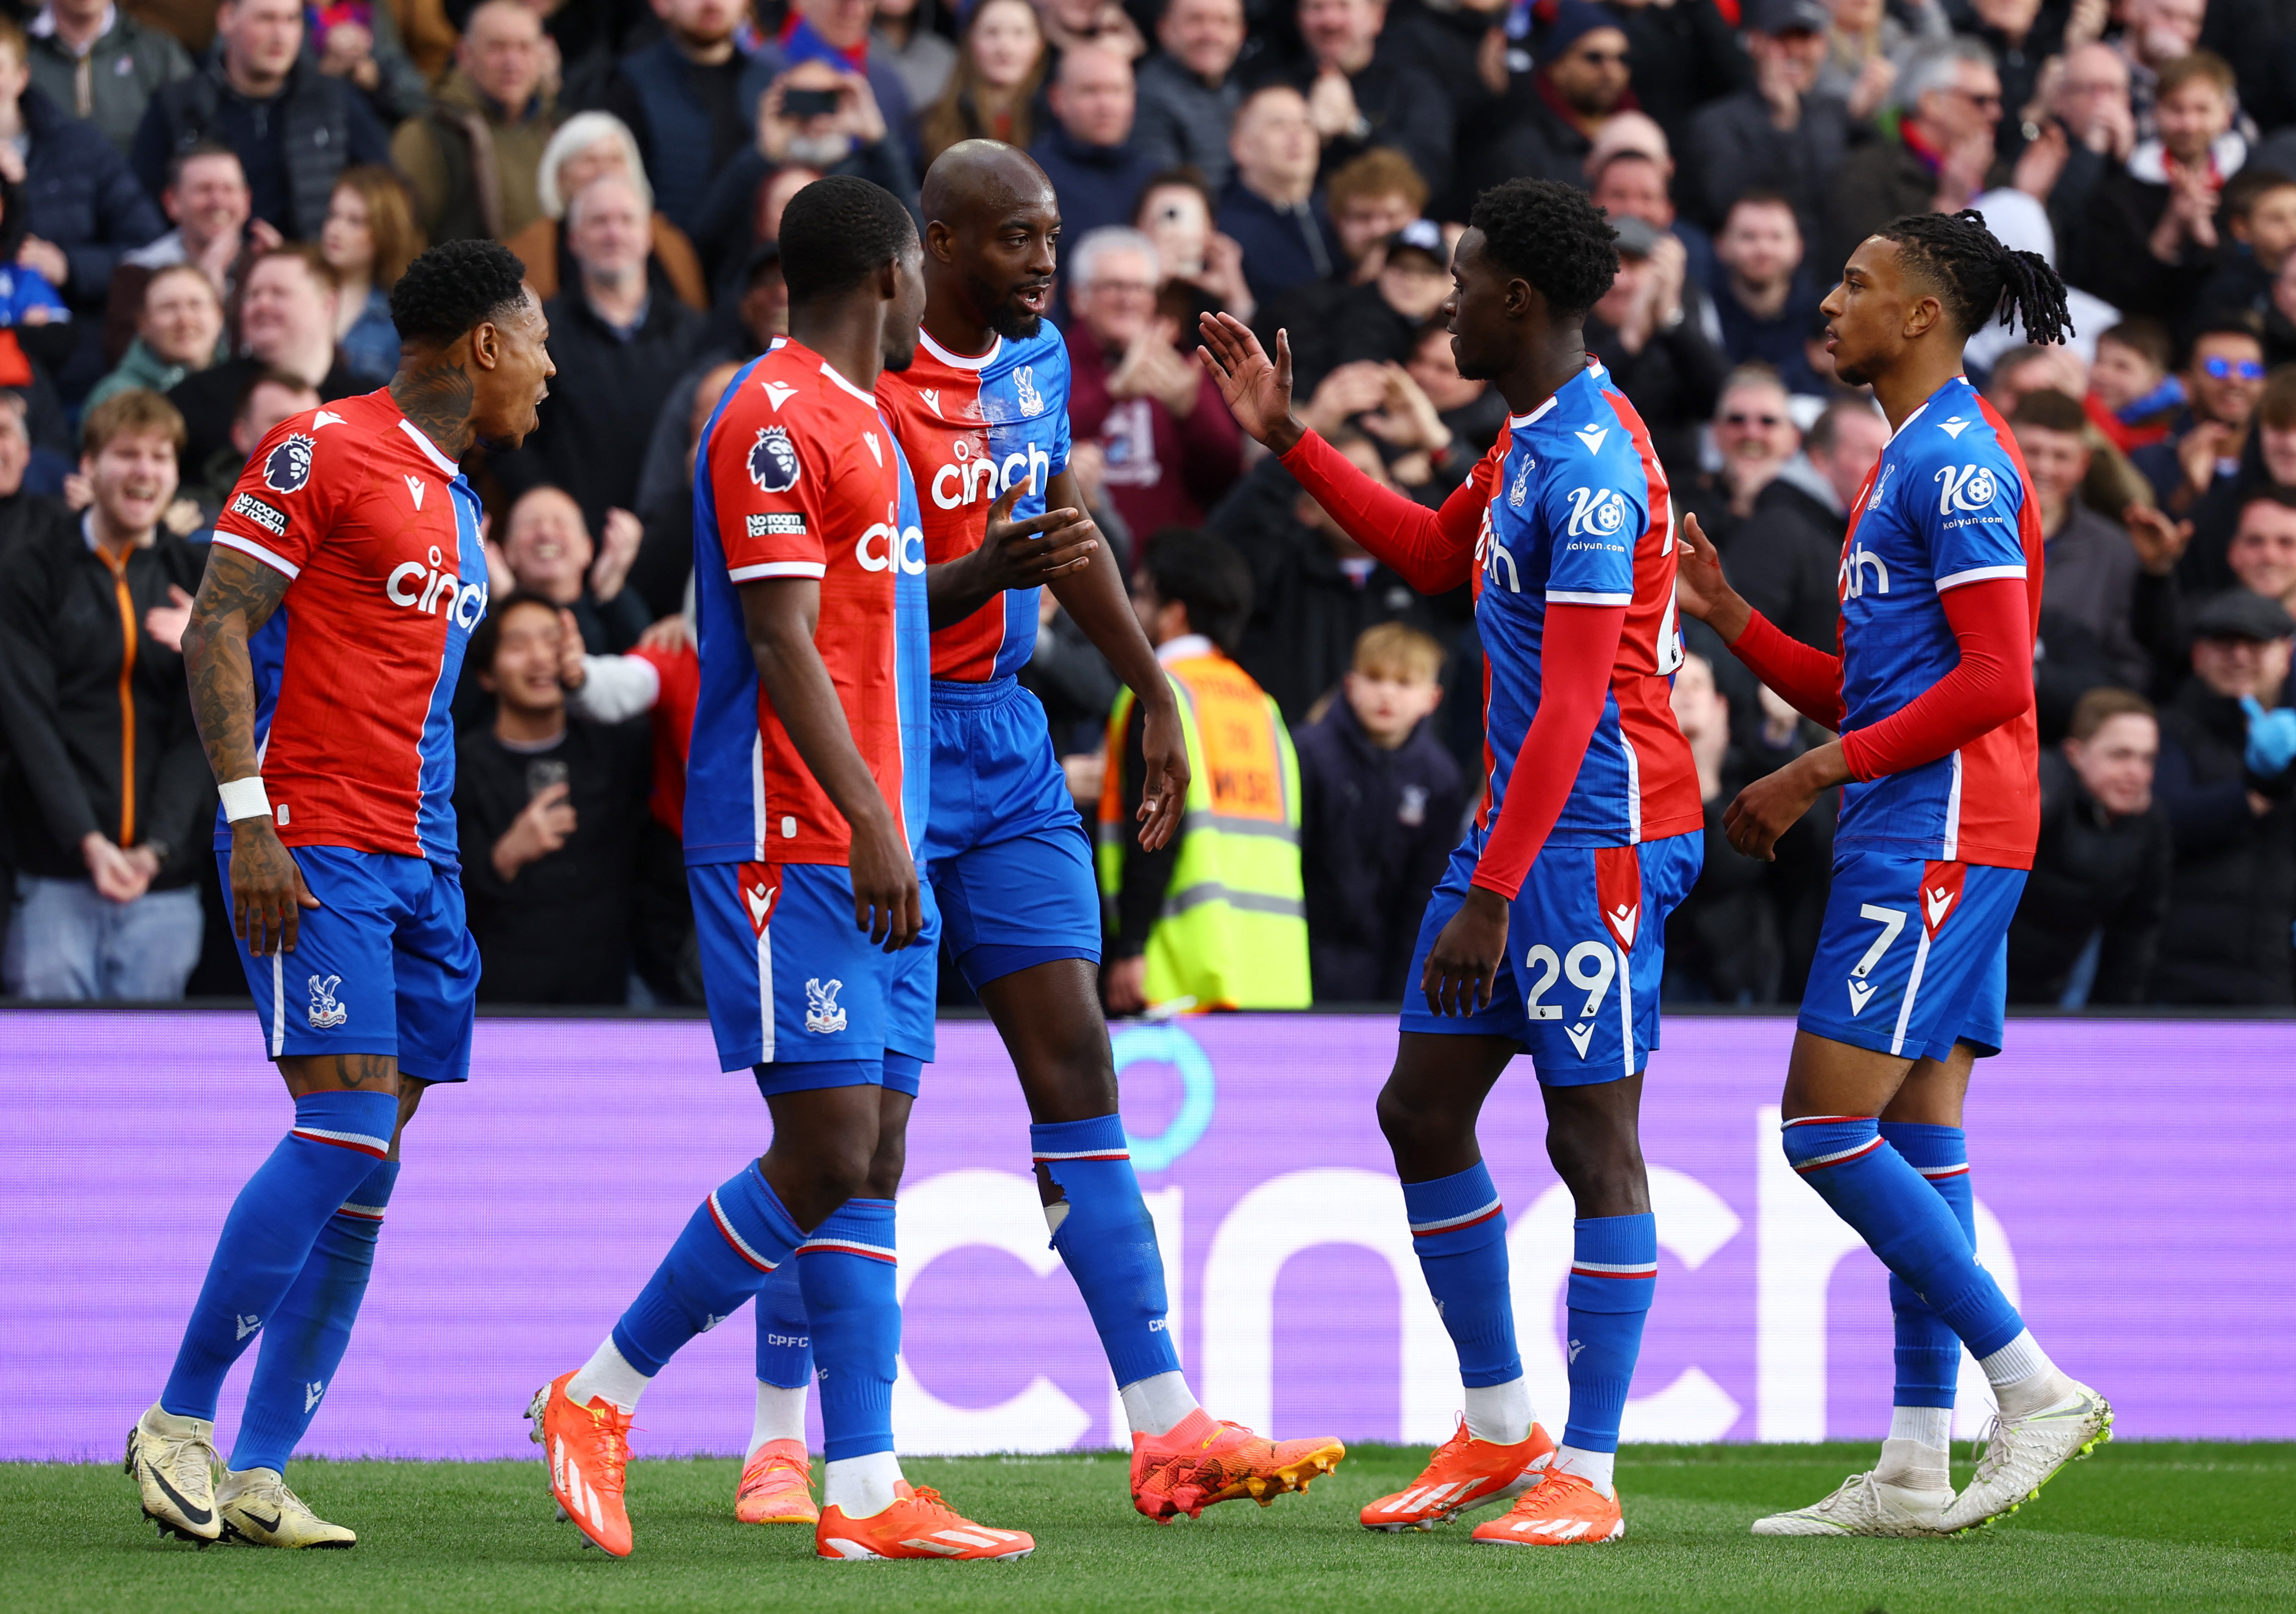 Crystal Palace's Mateta nets brace in 5-2 thrashing of West Ham | Reuters